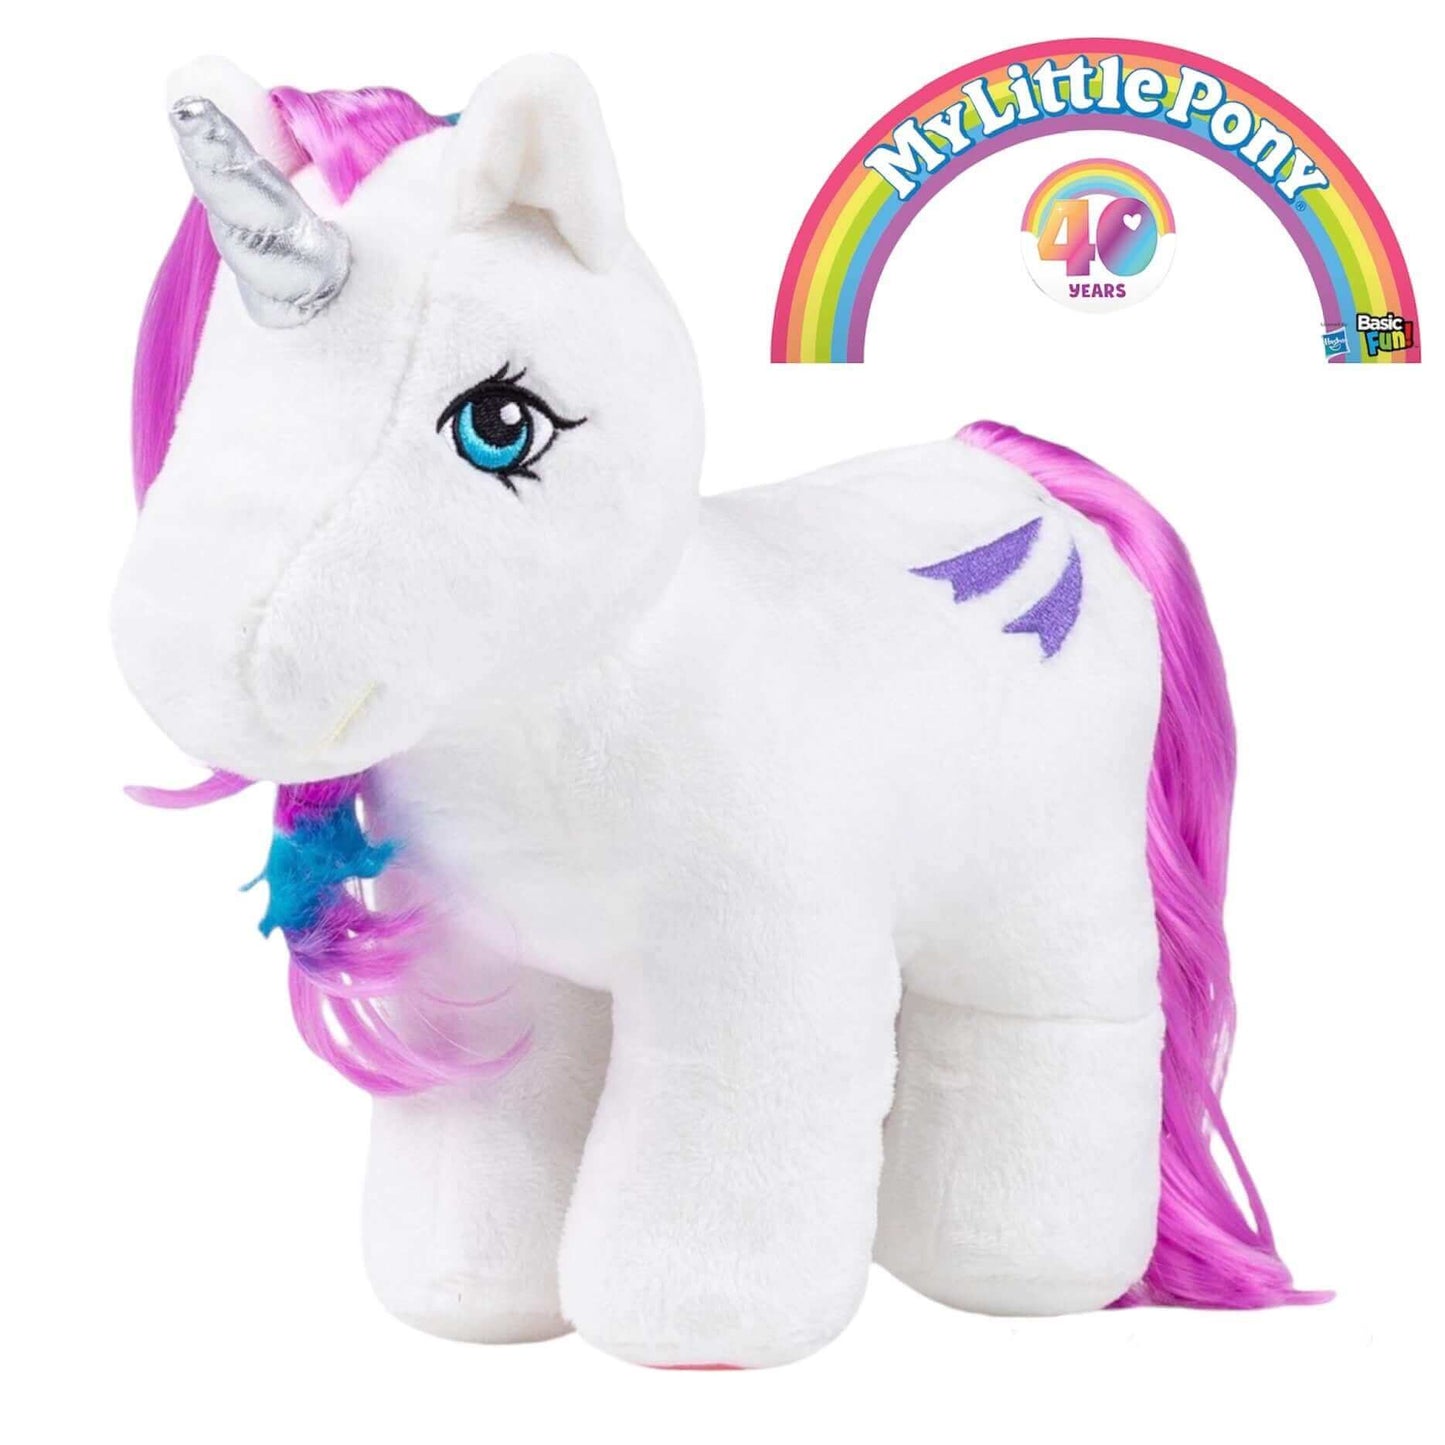 40th Anniversary My Little Pony Plush- Glory